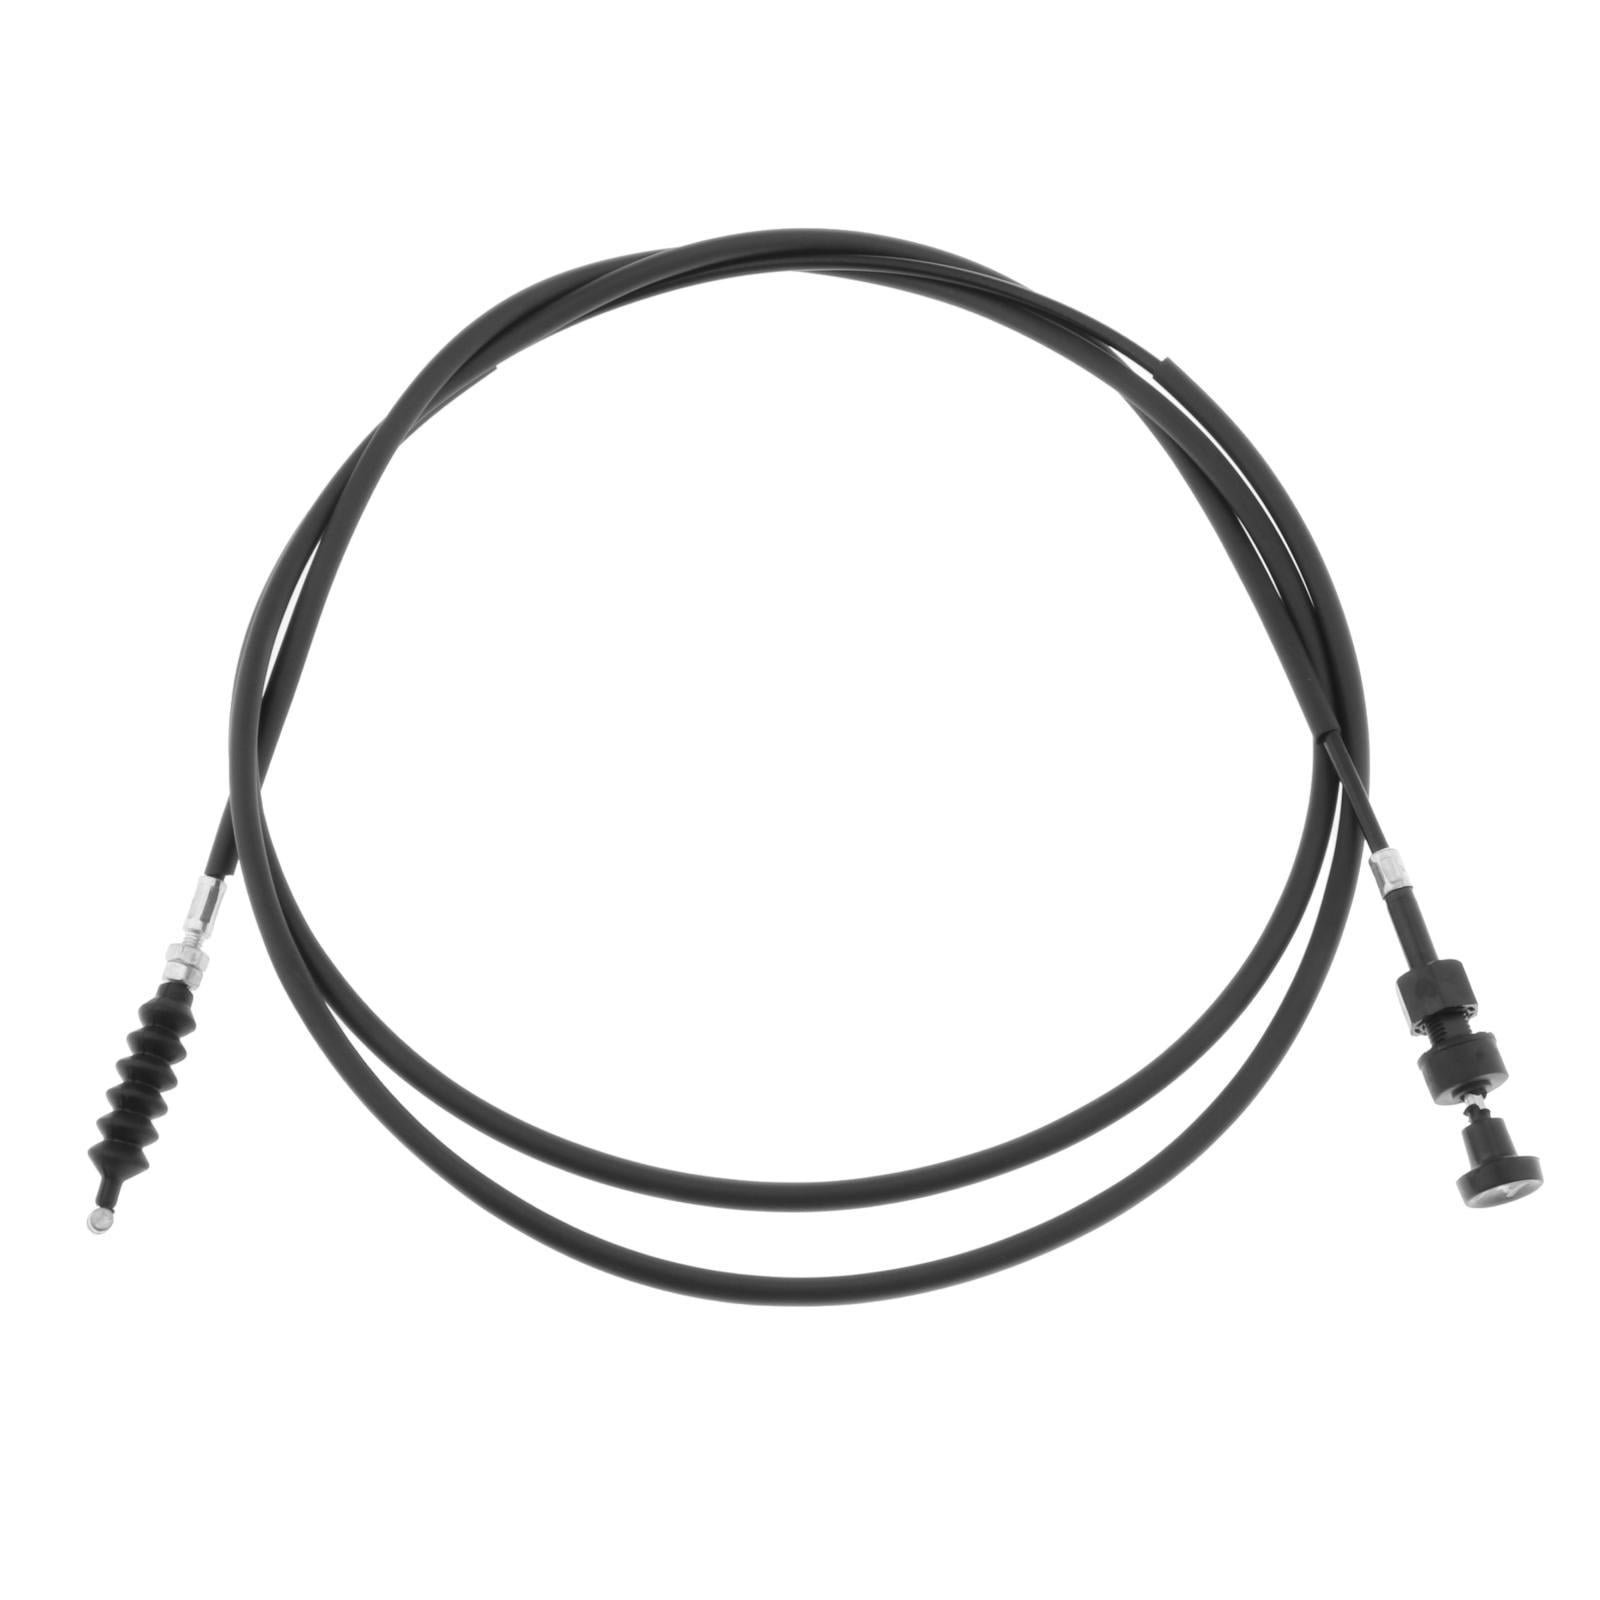 New Choke/Starter Cable 54017-1208 for Kawasaki 2001-2009 MULE 3000 MULE 4010 4x4